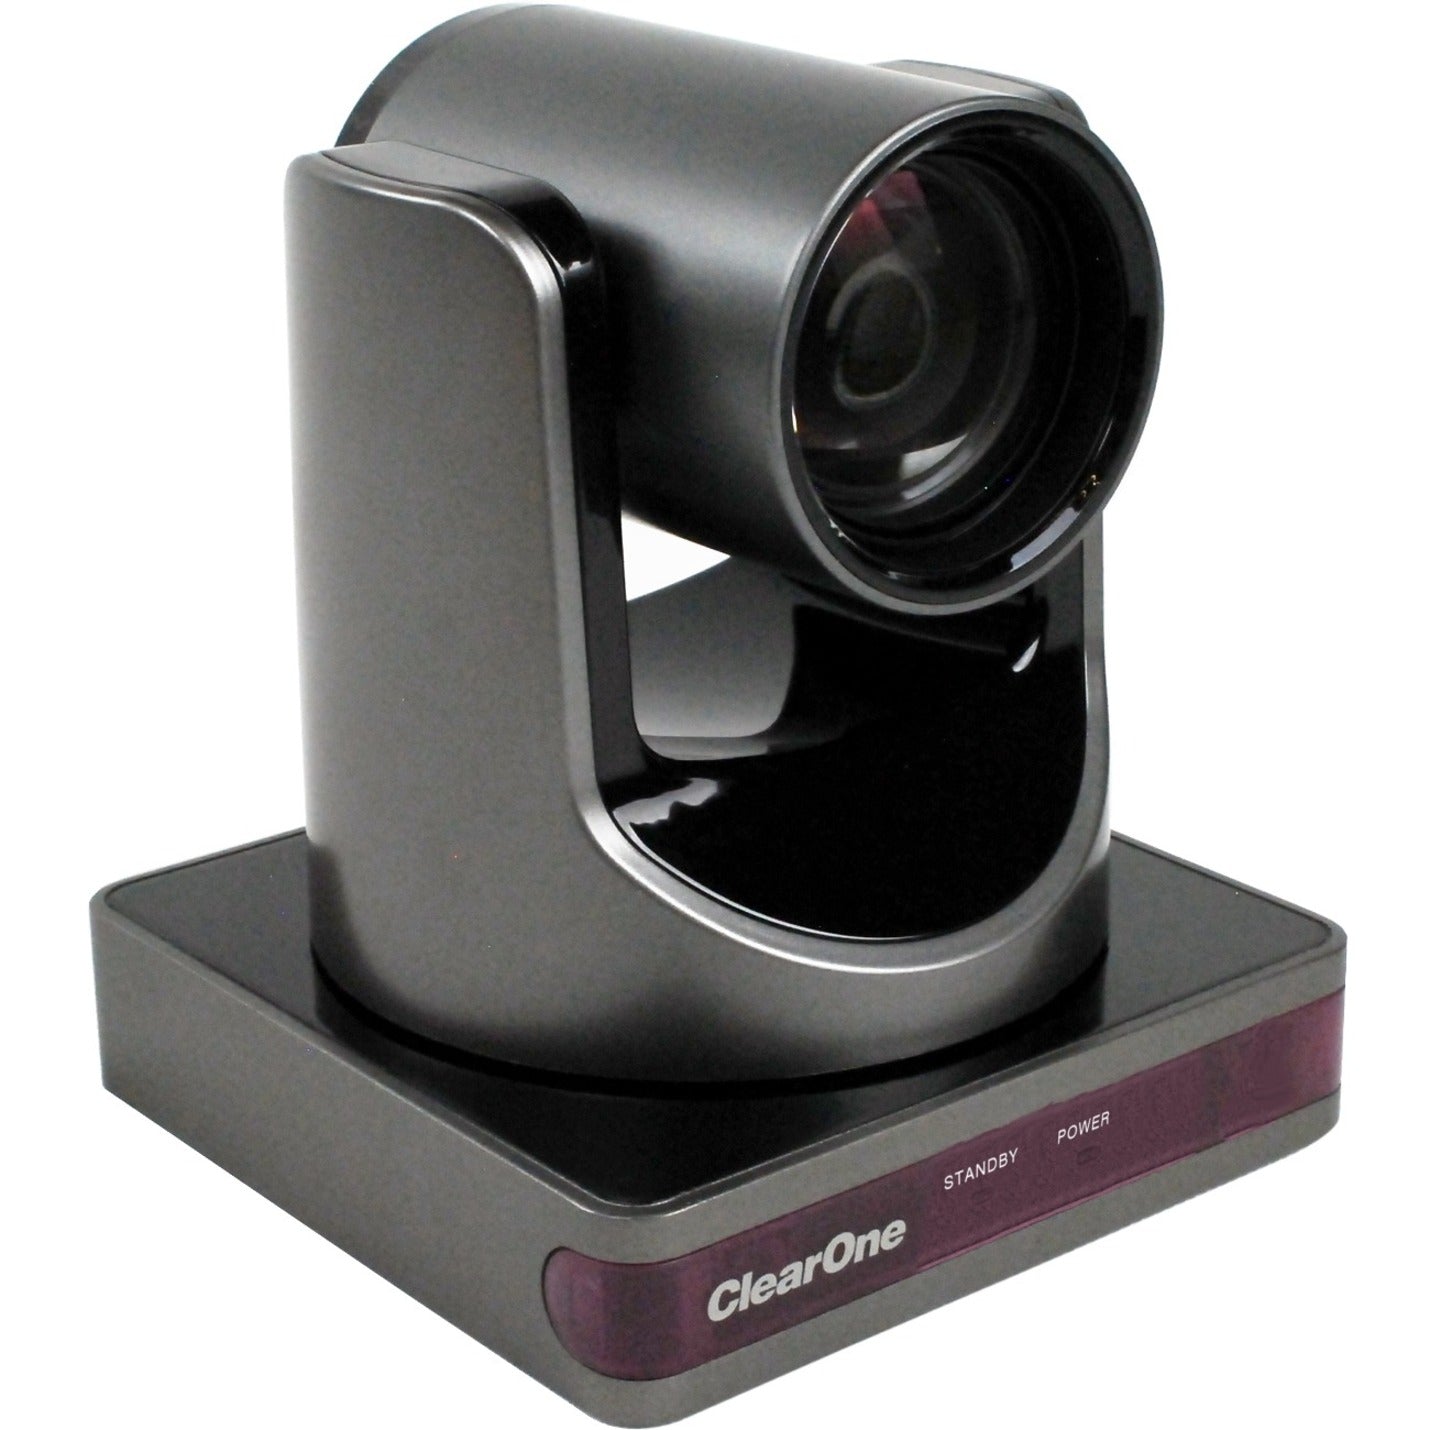 ClearOne 910-2100-004 UNITE 150 USB PTZ Camera, 2.1 Megapixel, 1920 x 1080, 30 fps